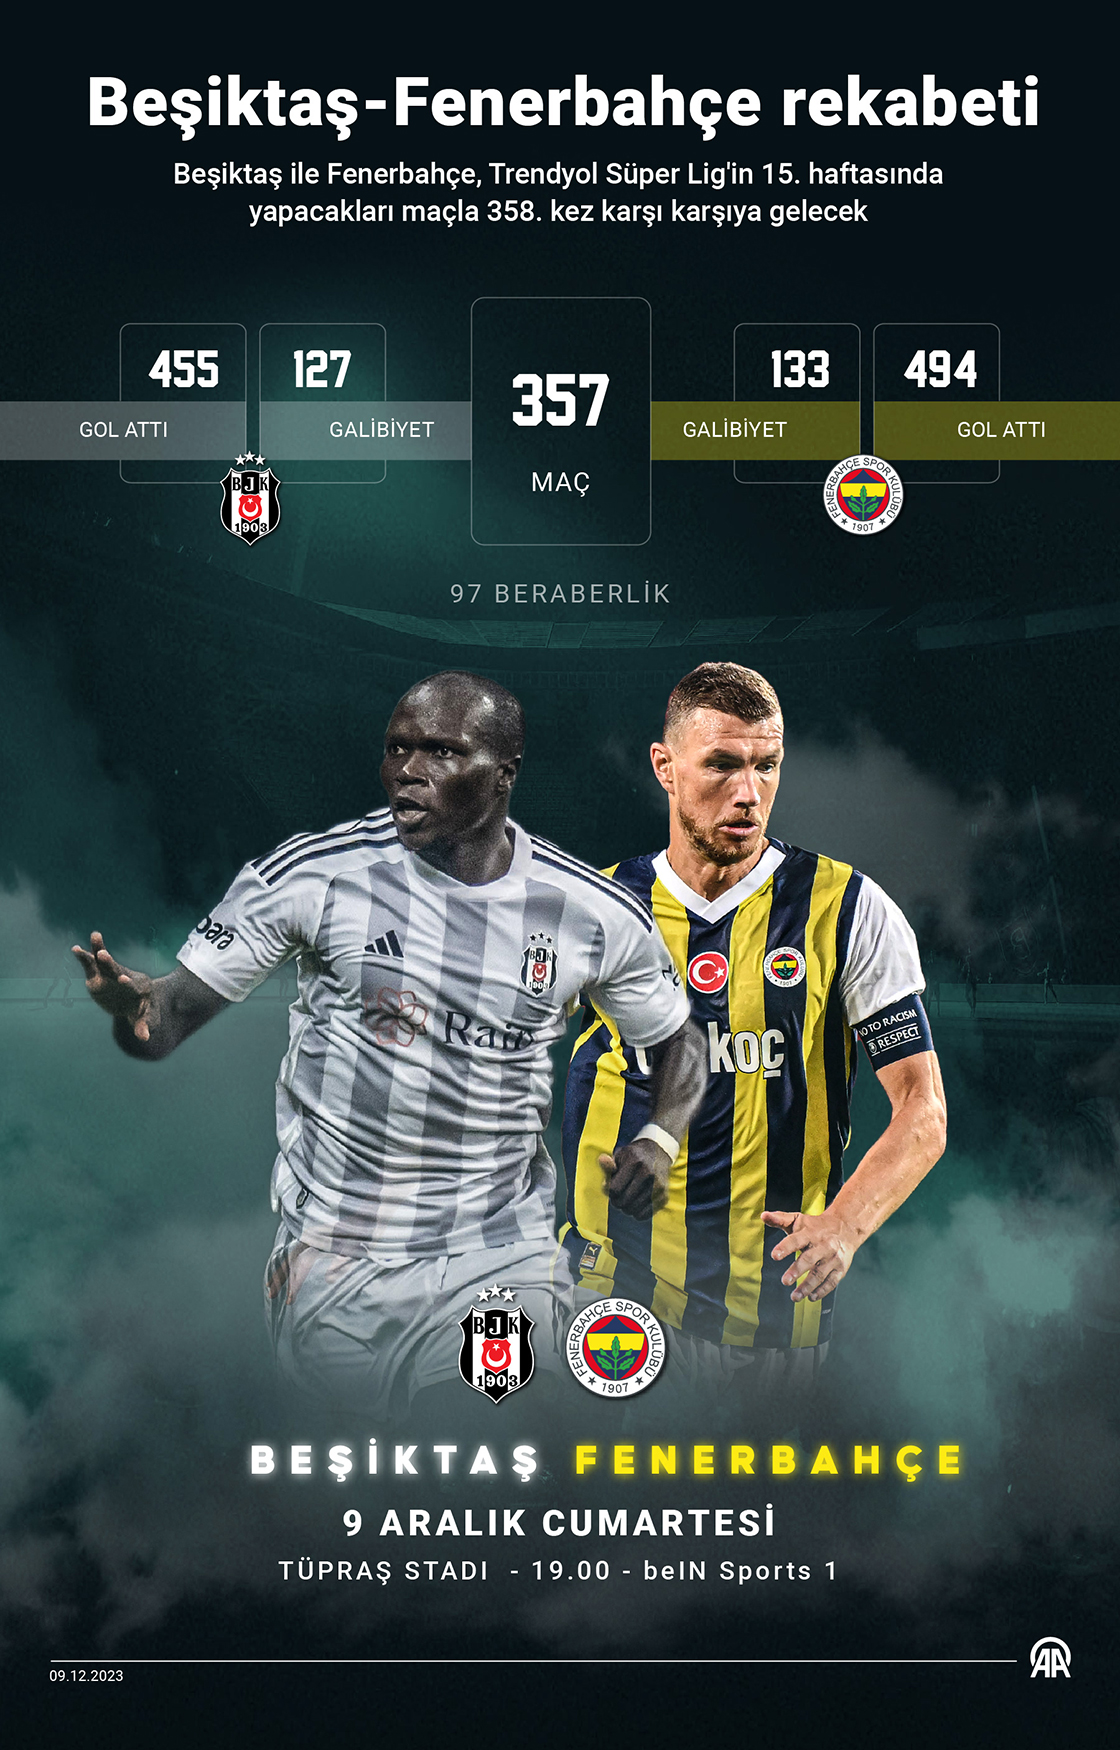 Beşiktaş-Fenerbahçe rekabeti